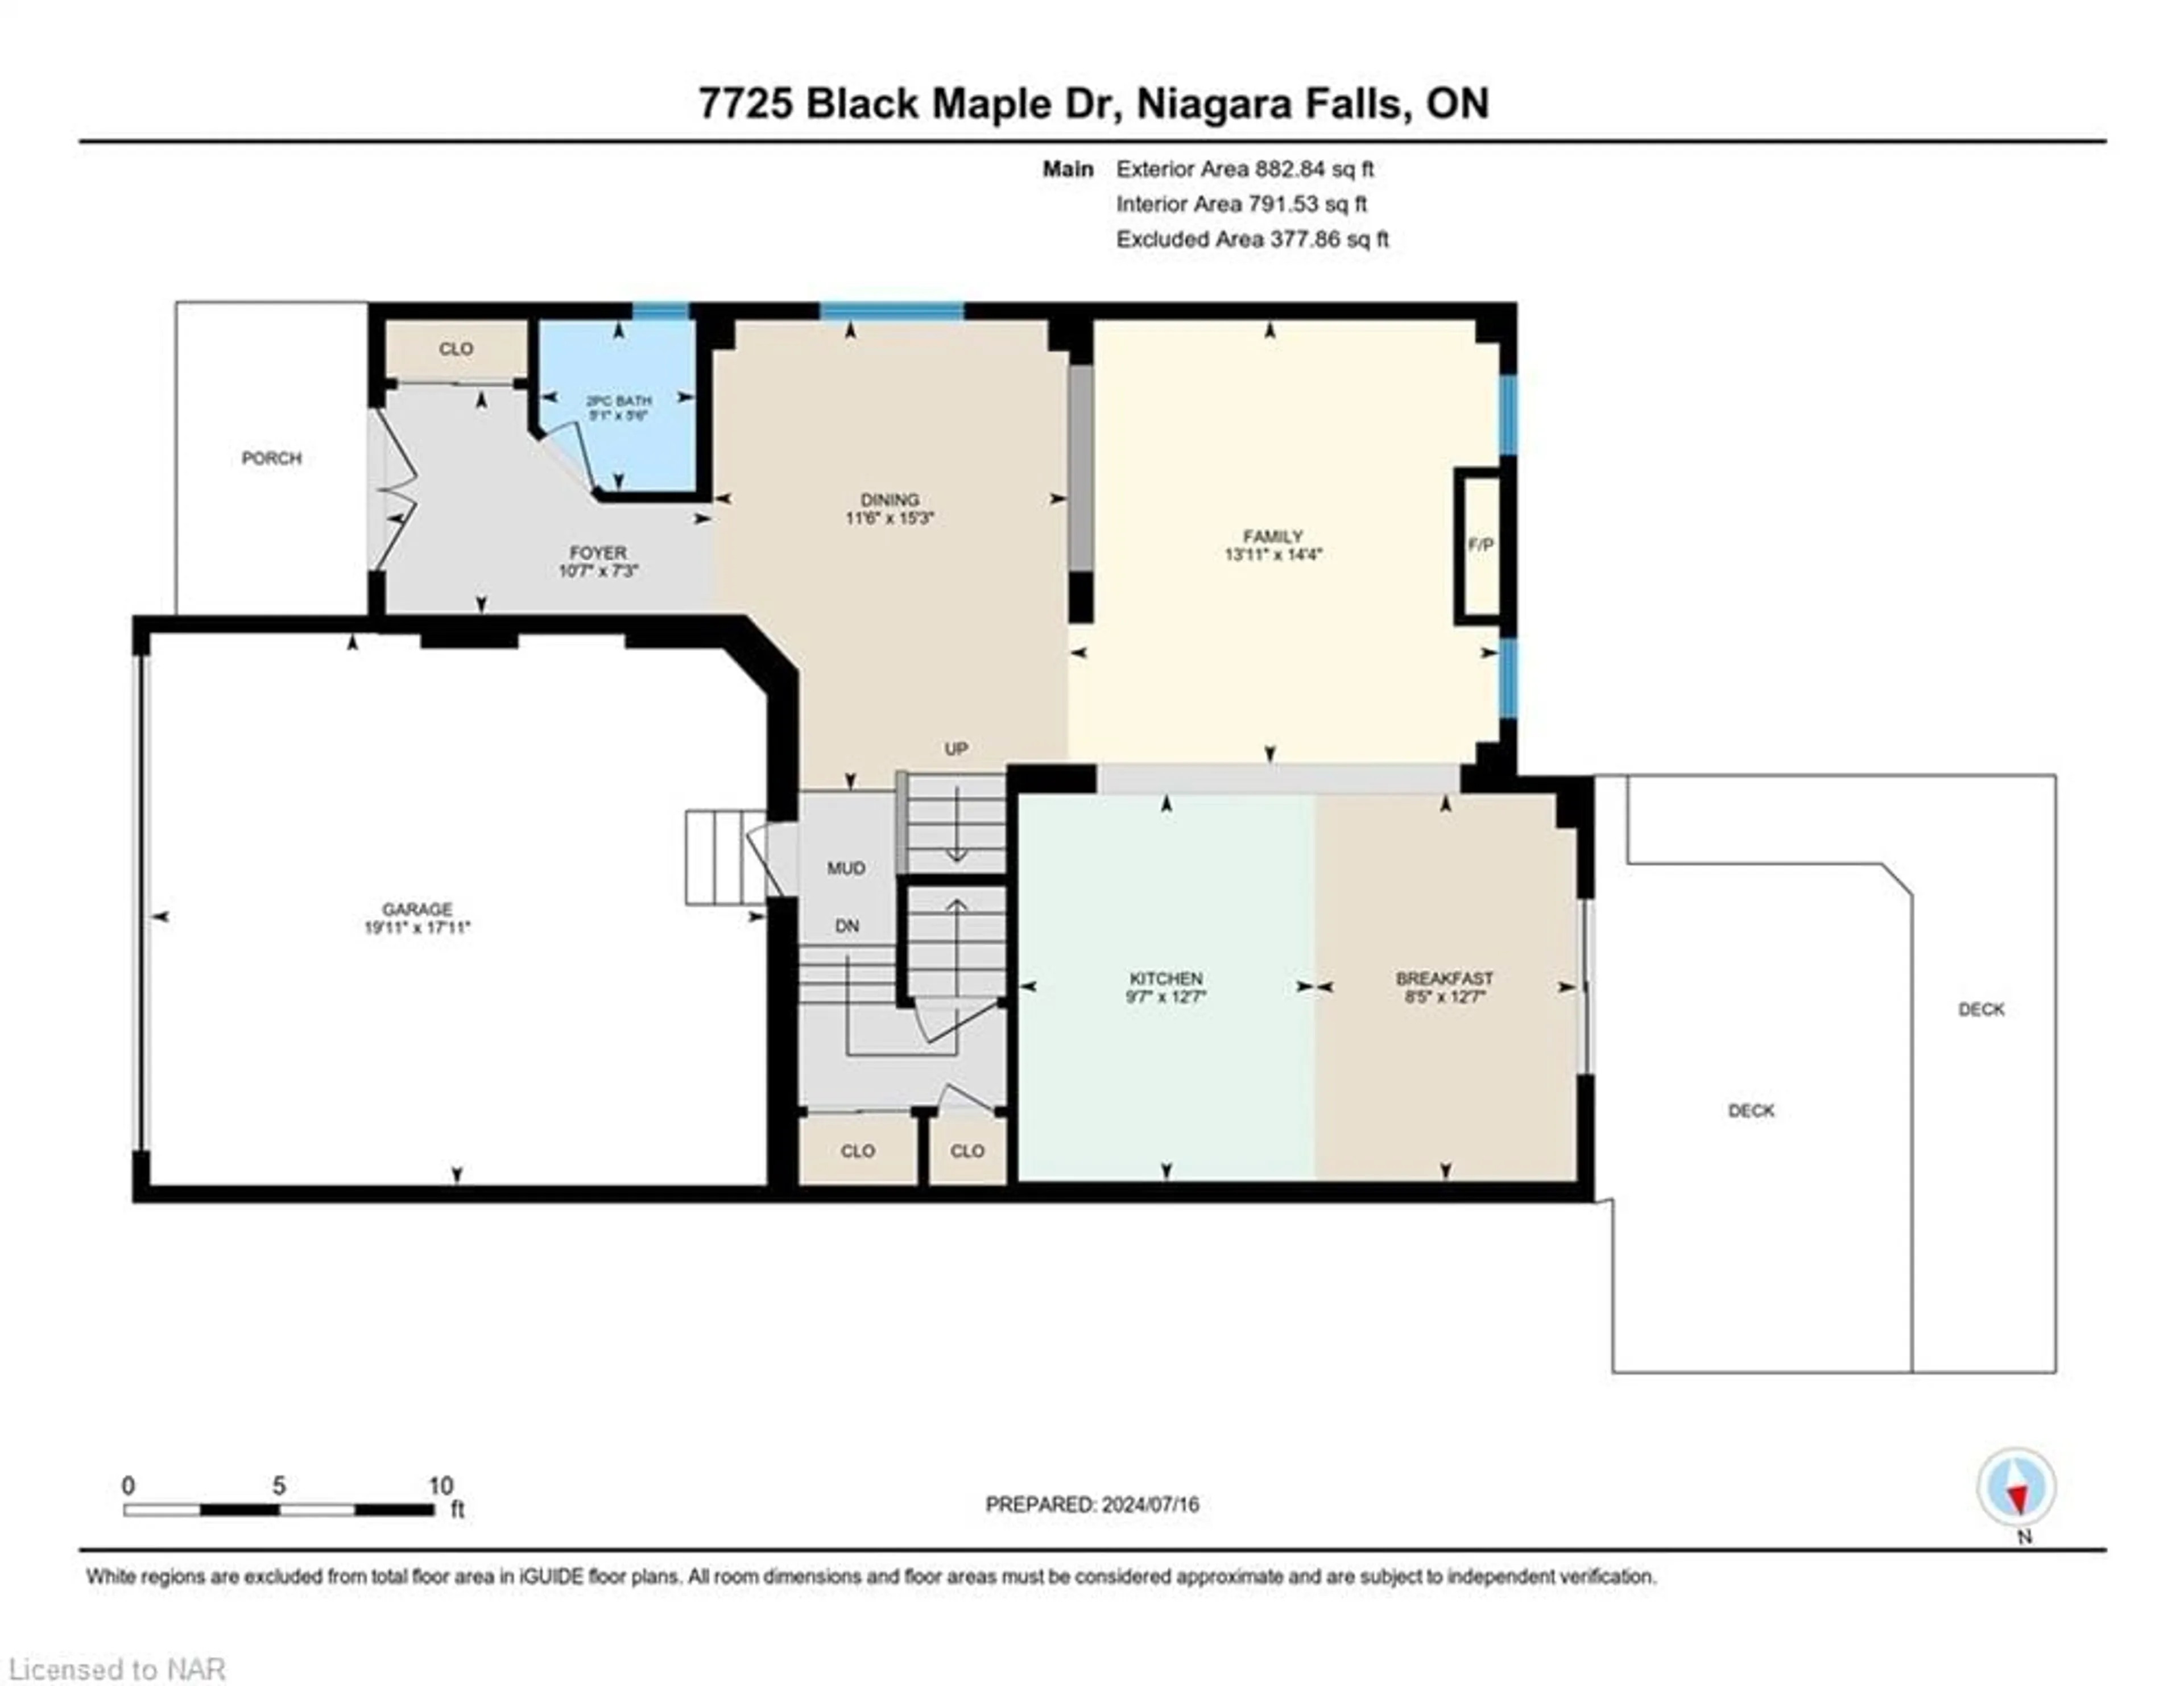 Floor plan for 7725 Black Maple Dr, Niagara Falls Ontario L2H 0N7